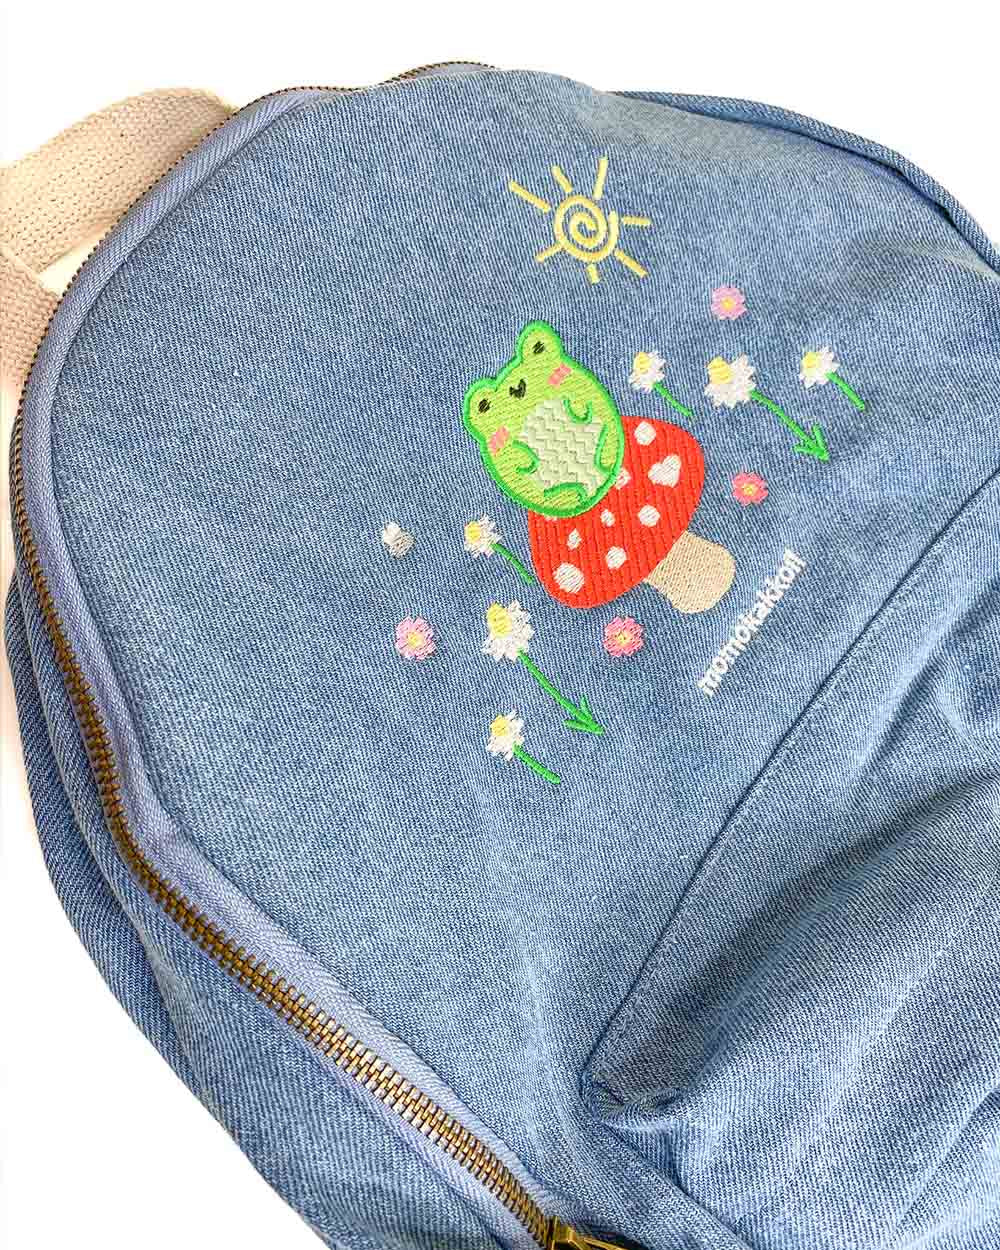 Froggy & Nature Embroidered Denim Backpack - Momokakkoii